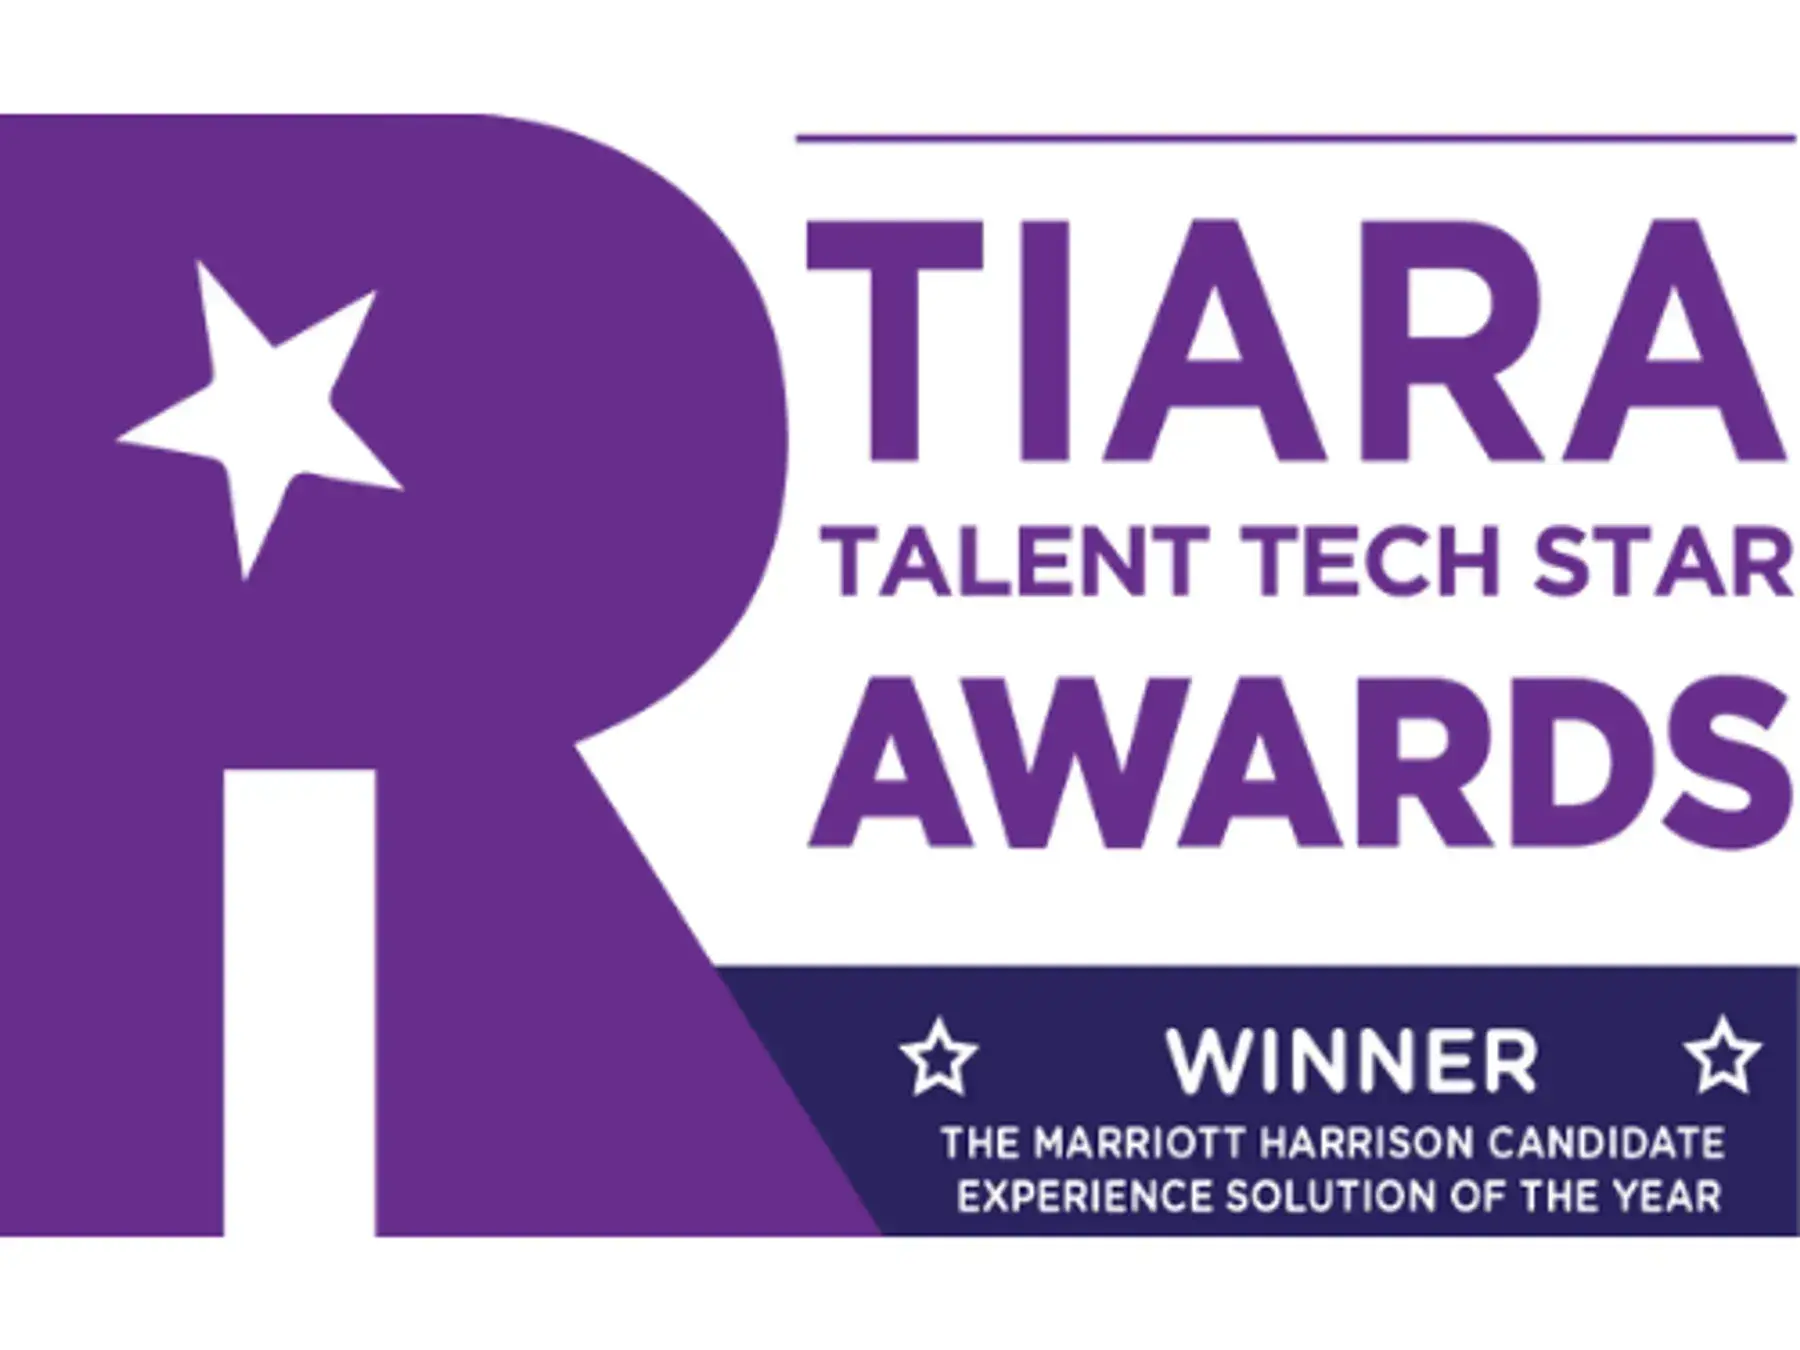 TIARA Talent Tech Star Awards Winner 2022